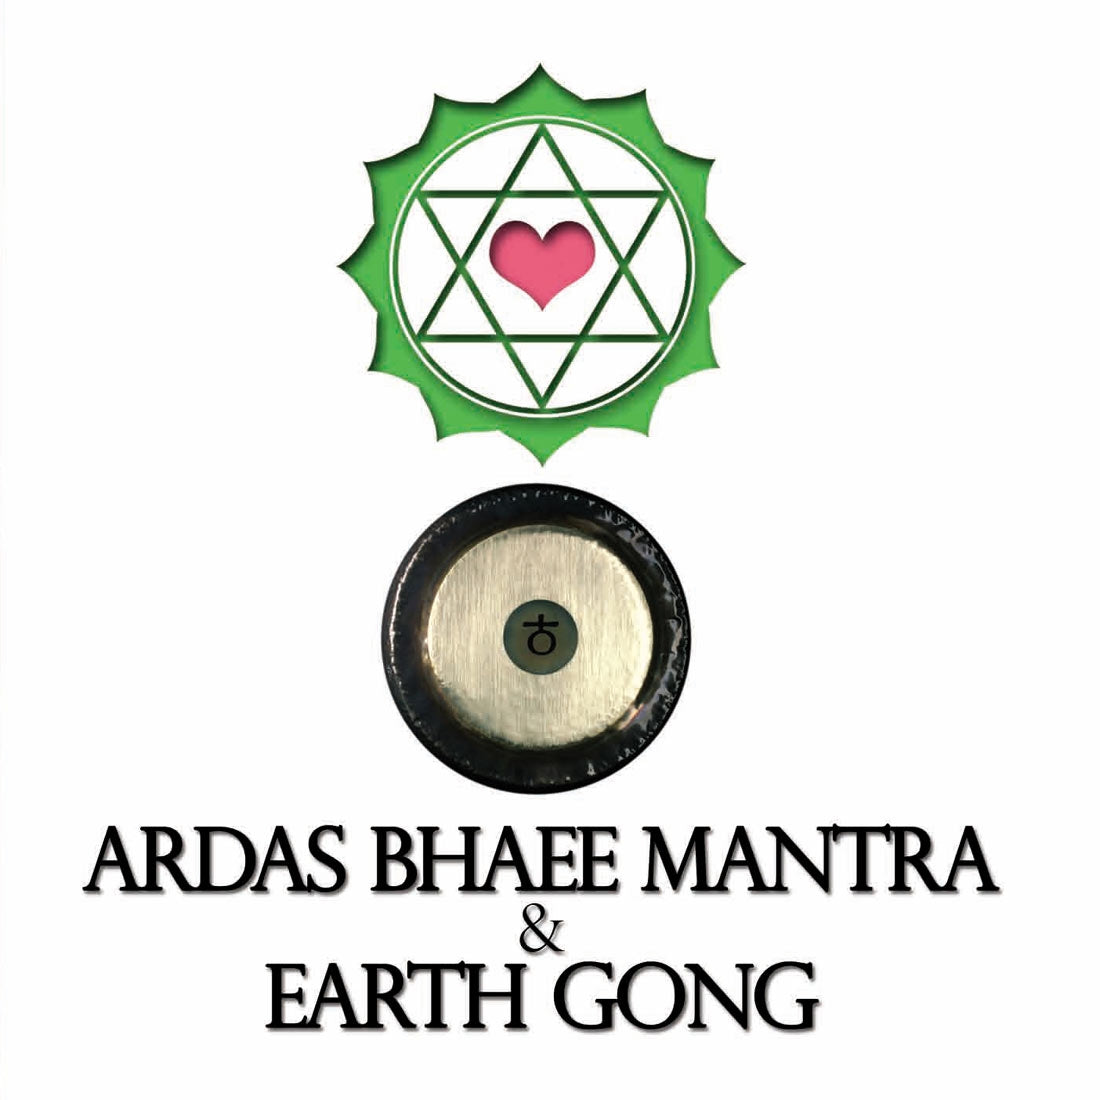 Ardas Bhaee Mantra & Earth Gong - Mark Swan komplett